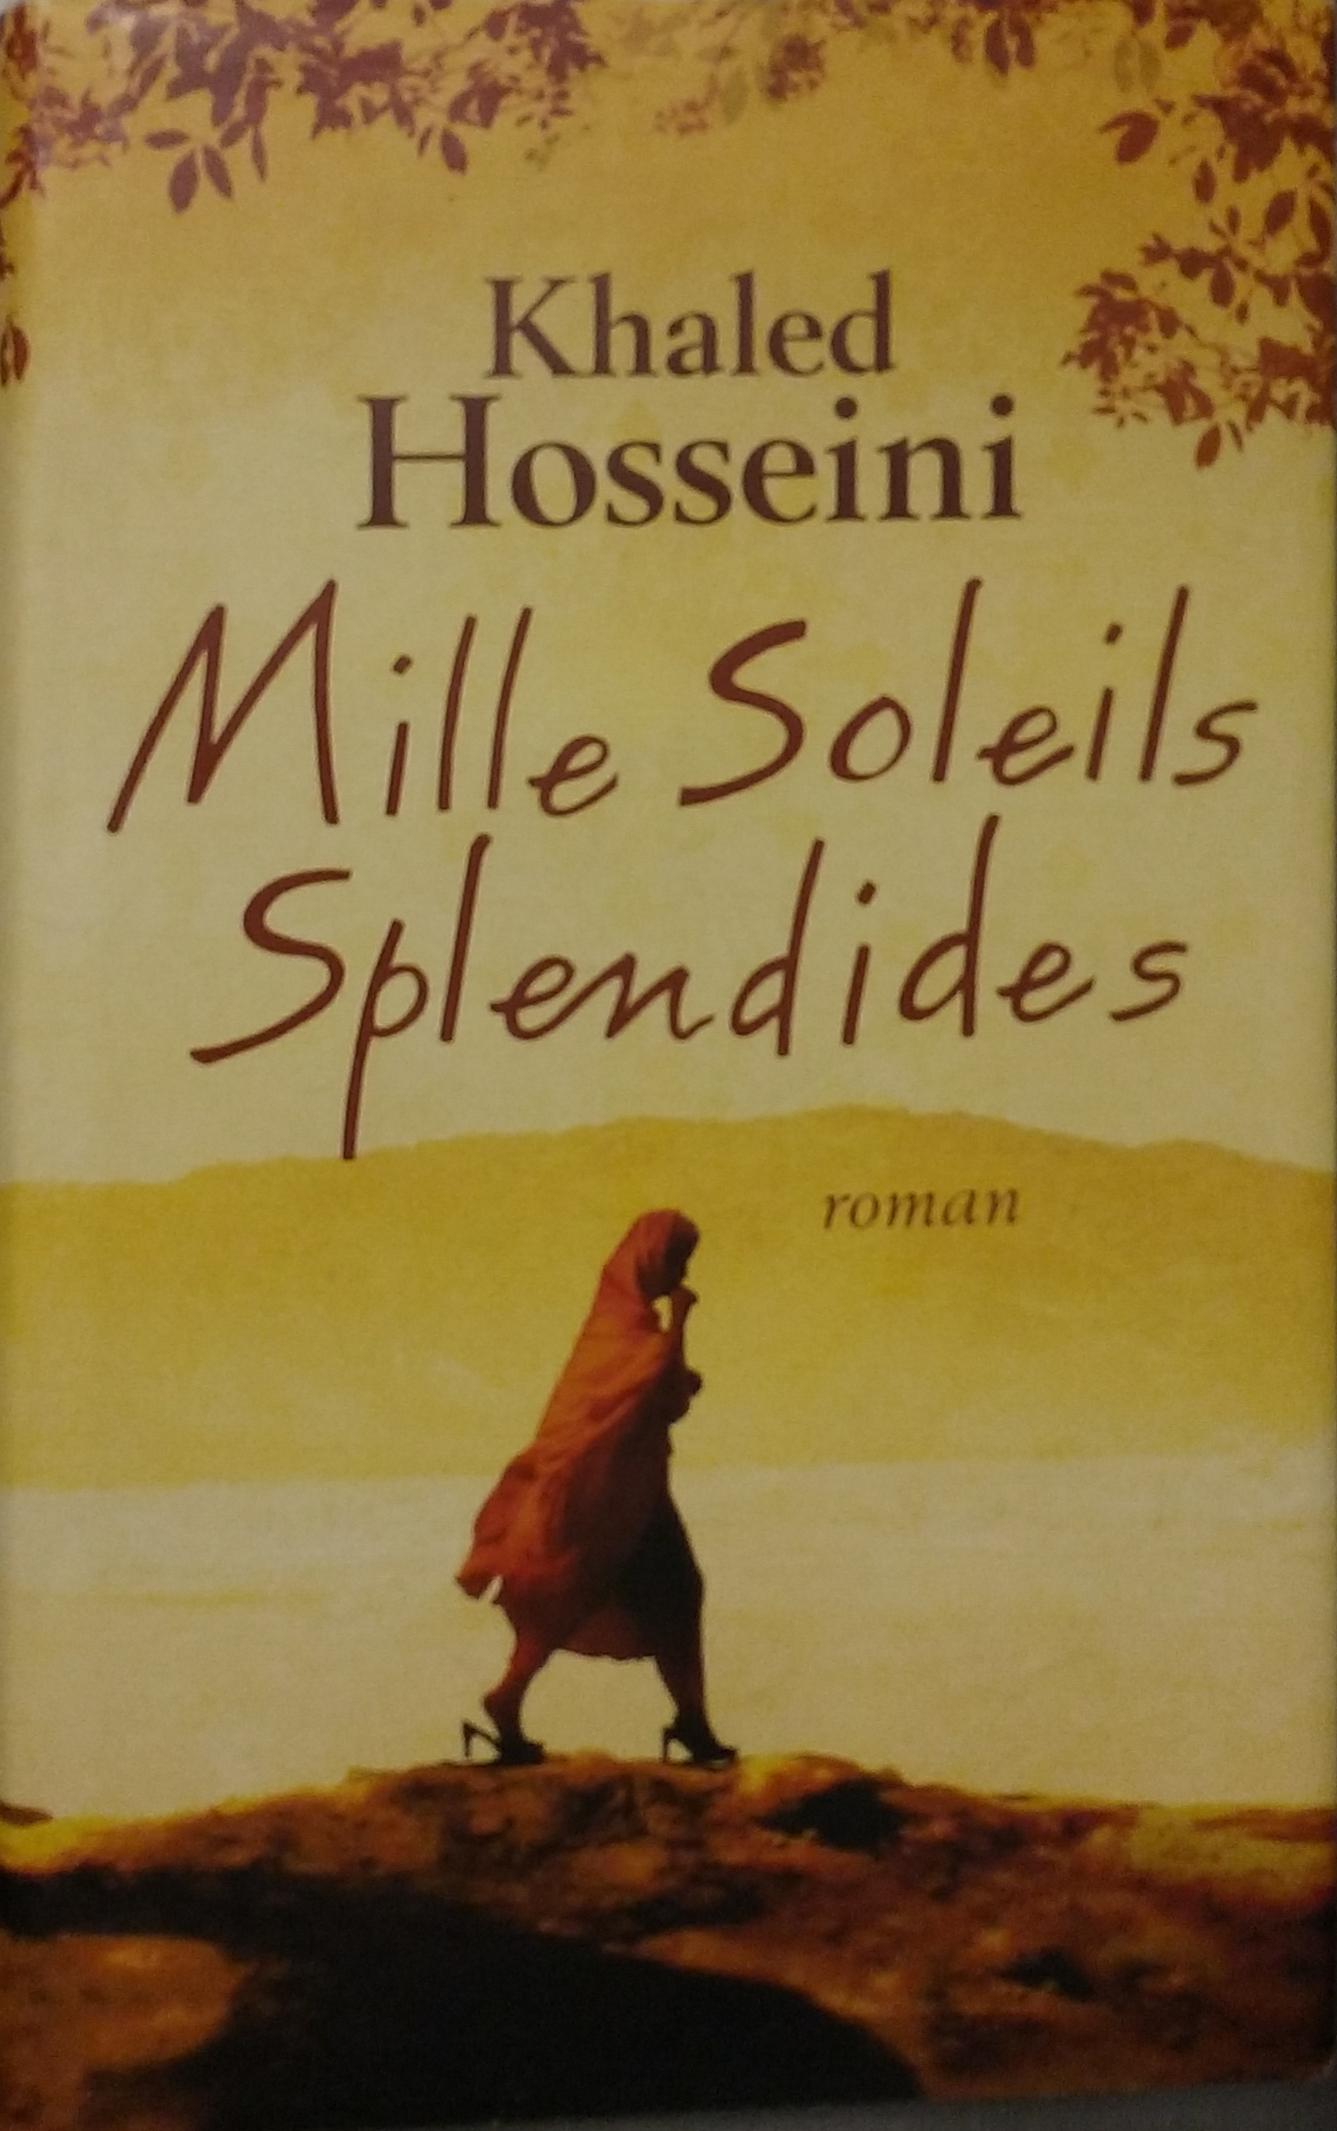 Mille soleils splendides Khaled Hosseini